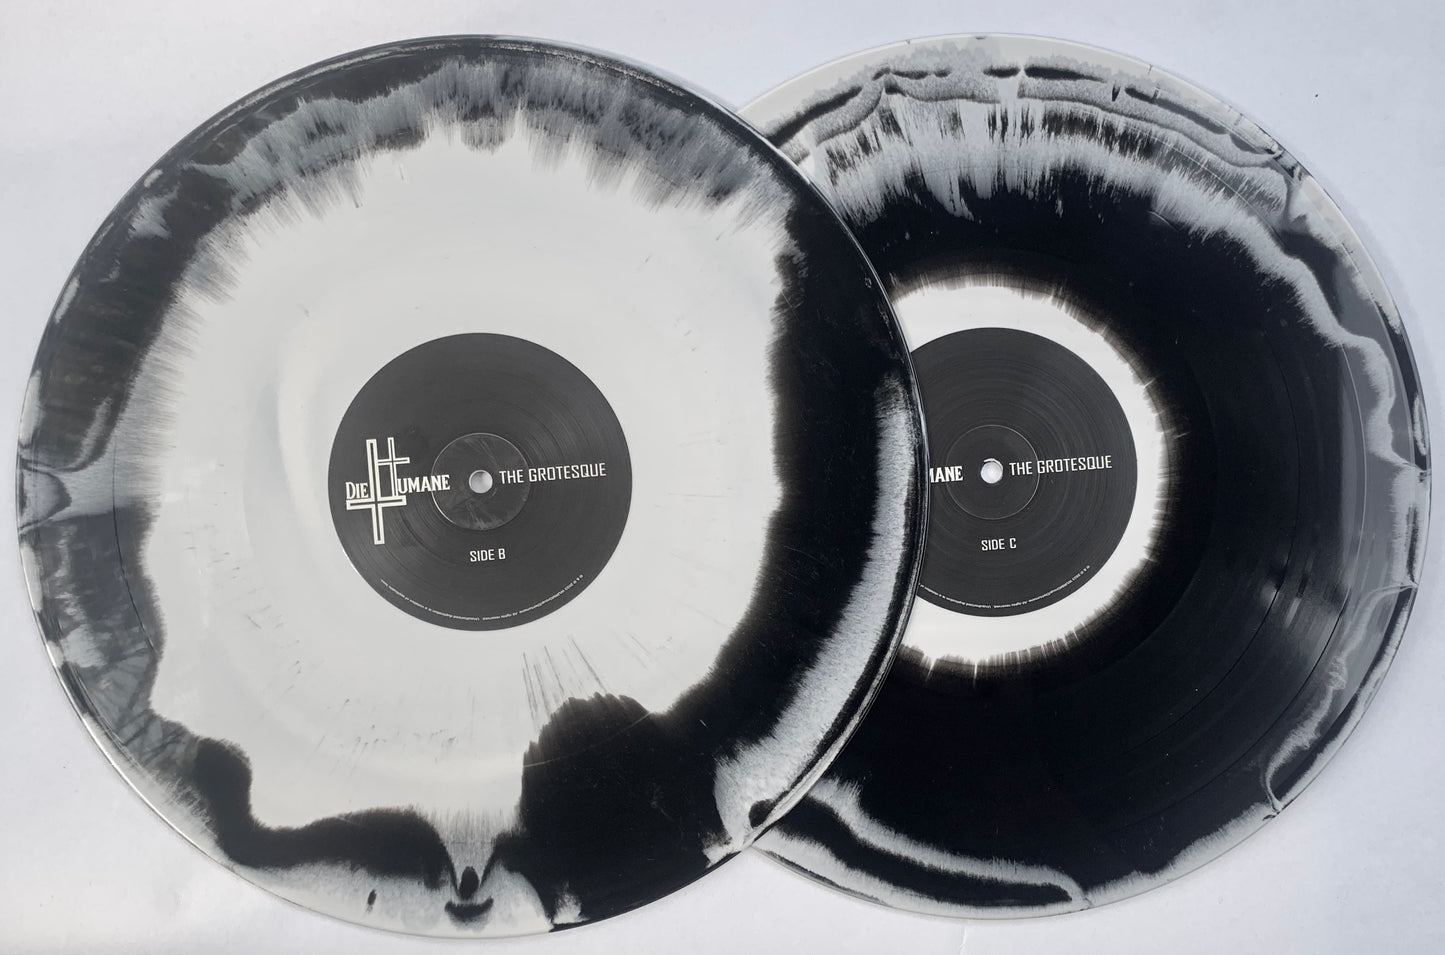 DieHumane - The Grotesque - Vinyl - Double Album